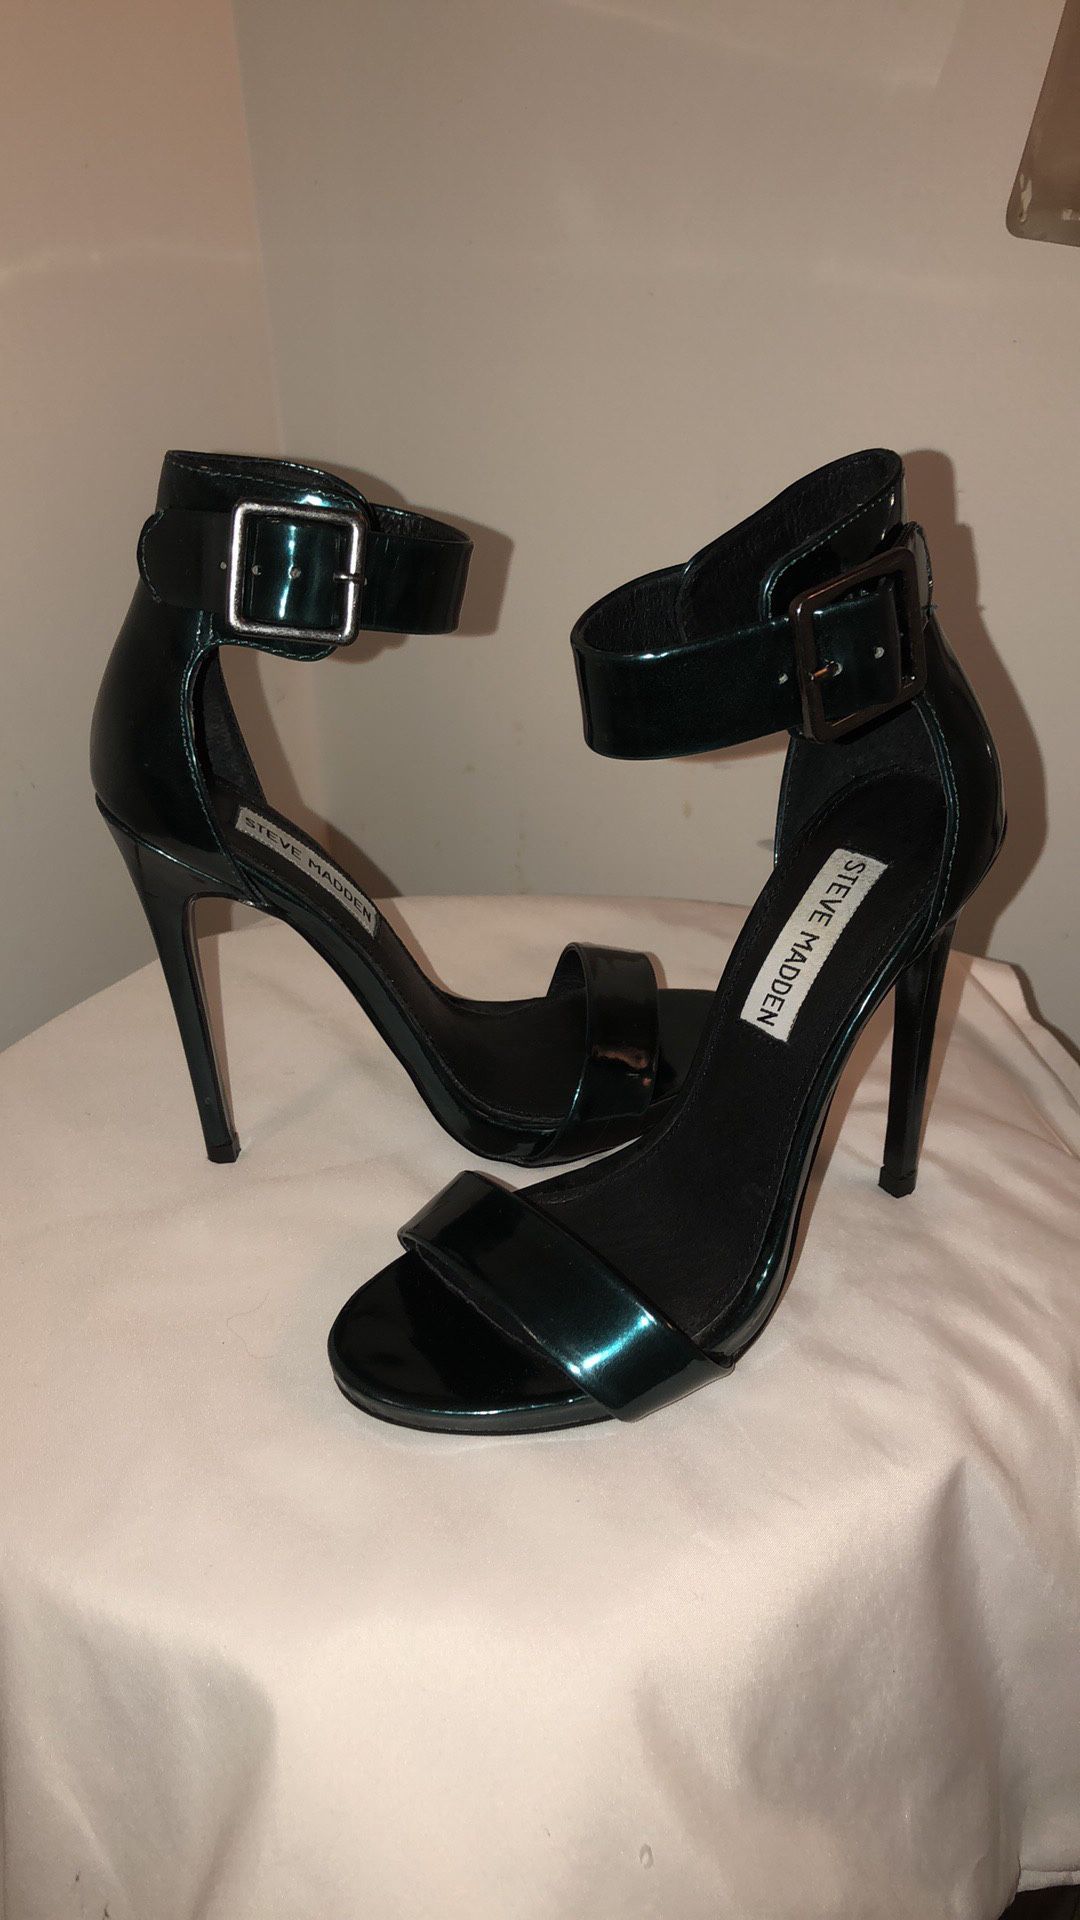 Steve Madden size 5 dark green patent leather heel